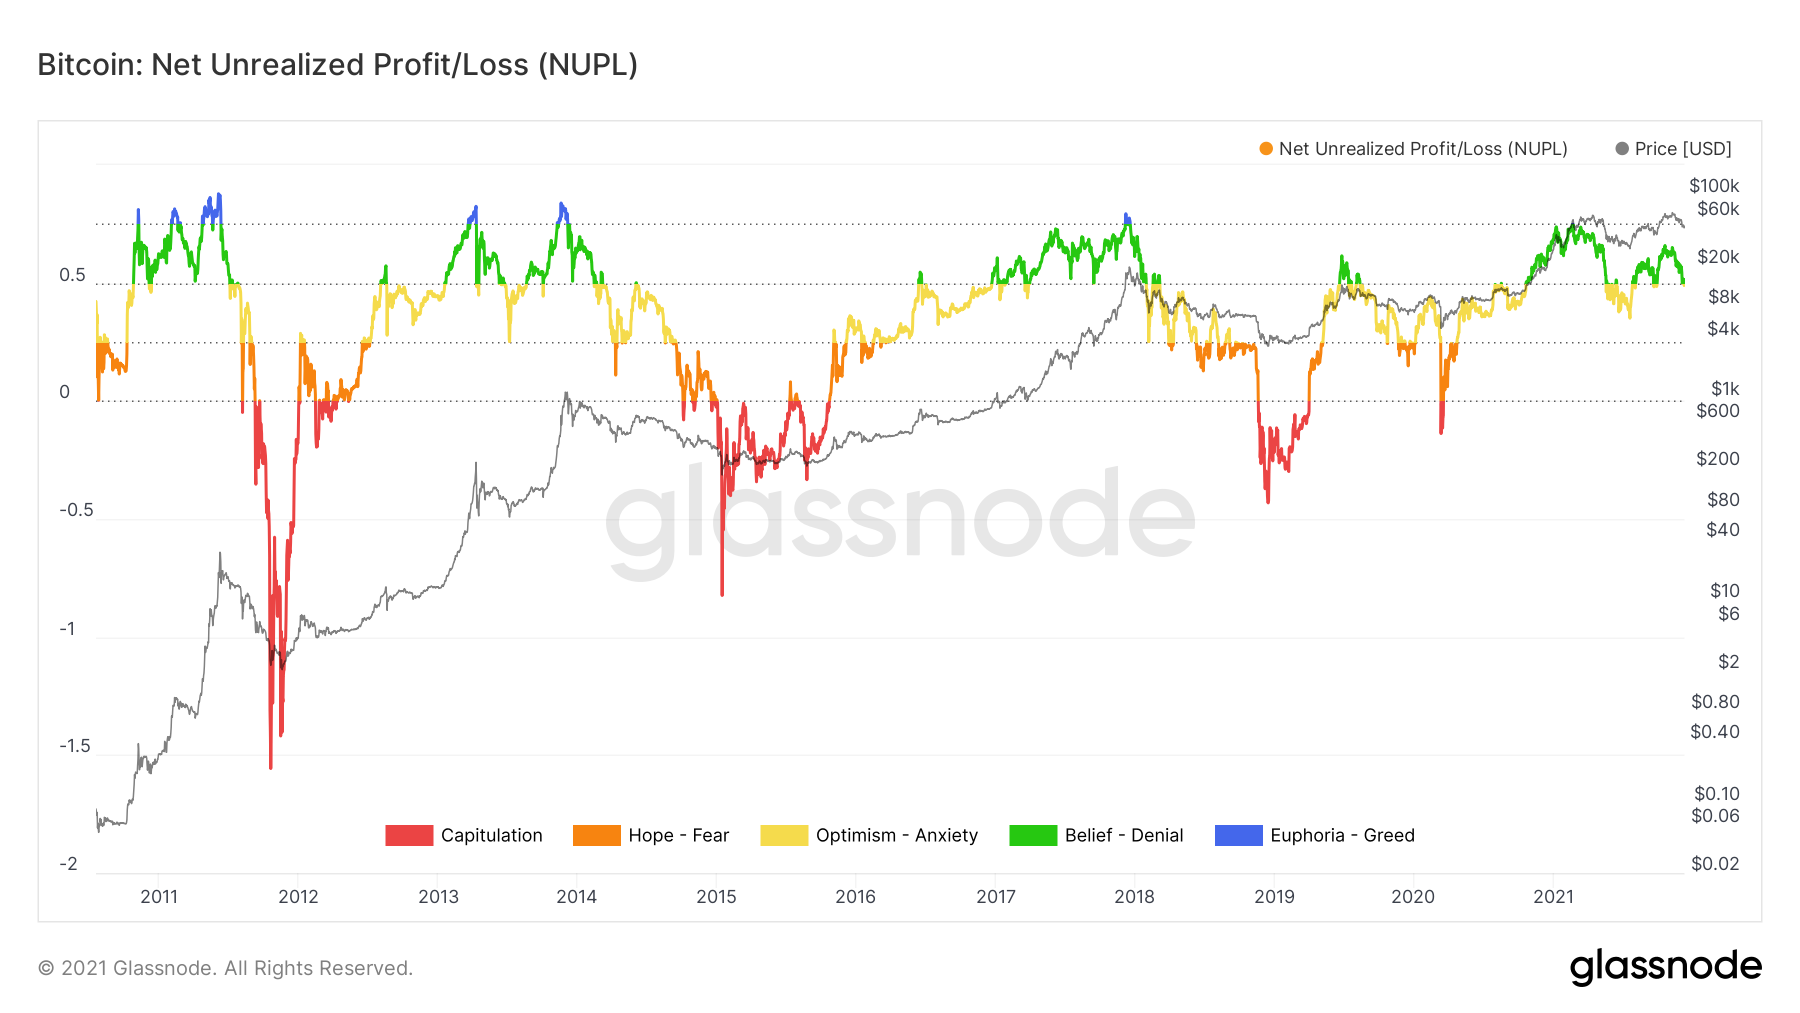 Bitcoin: Net Unrealized Profit/Loss (NUPL) by Glassnode